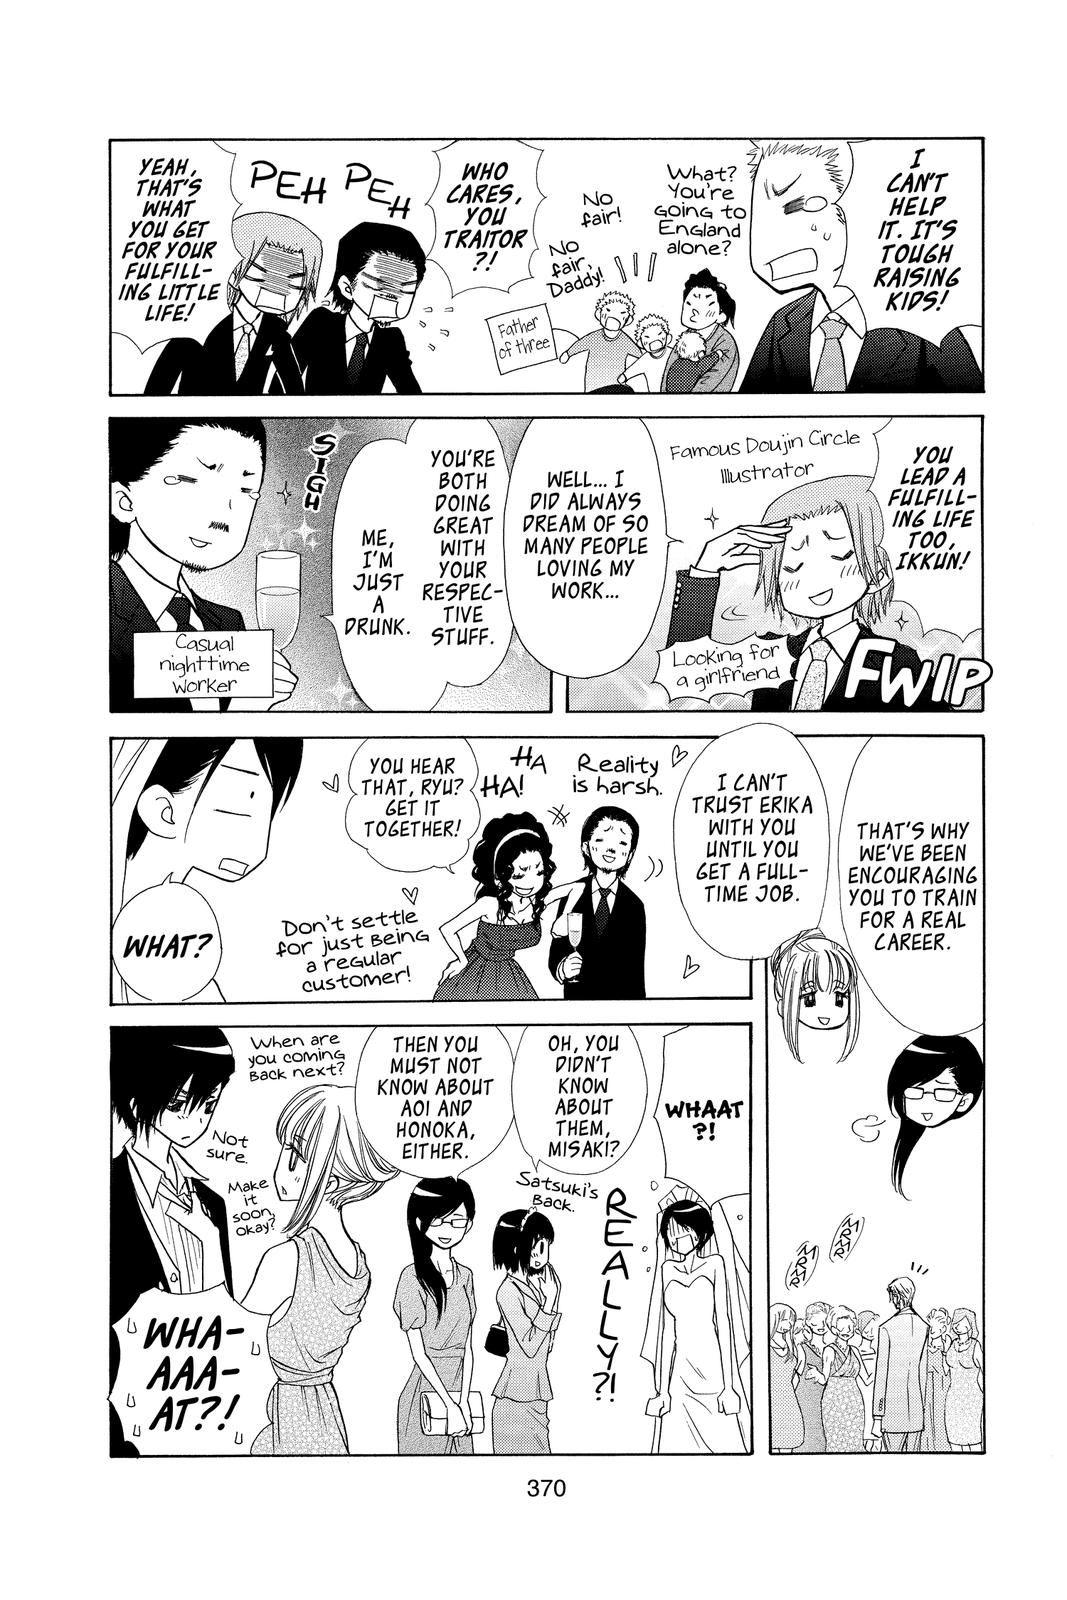 Anime Hitchers: Kaichou wa Maid-sama! Chapter 85 (END, free manga read on  link) - Kaichou wa Maid-sama (Contin.) - Wattpad